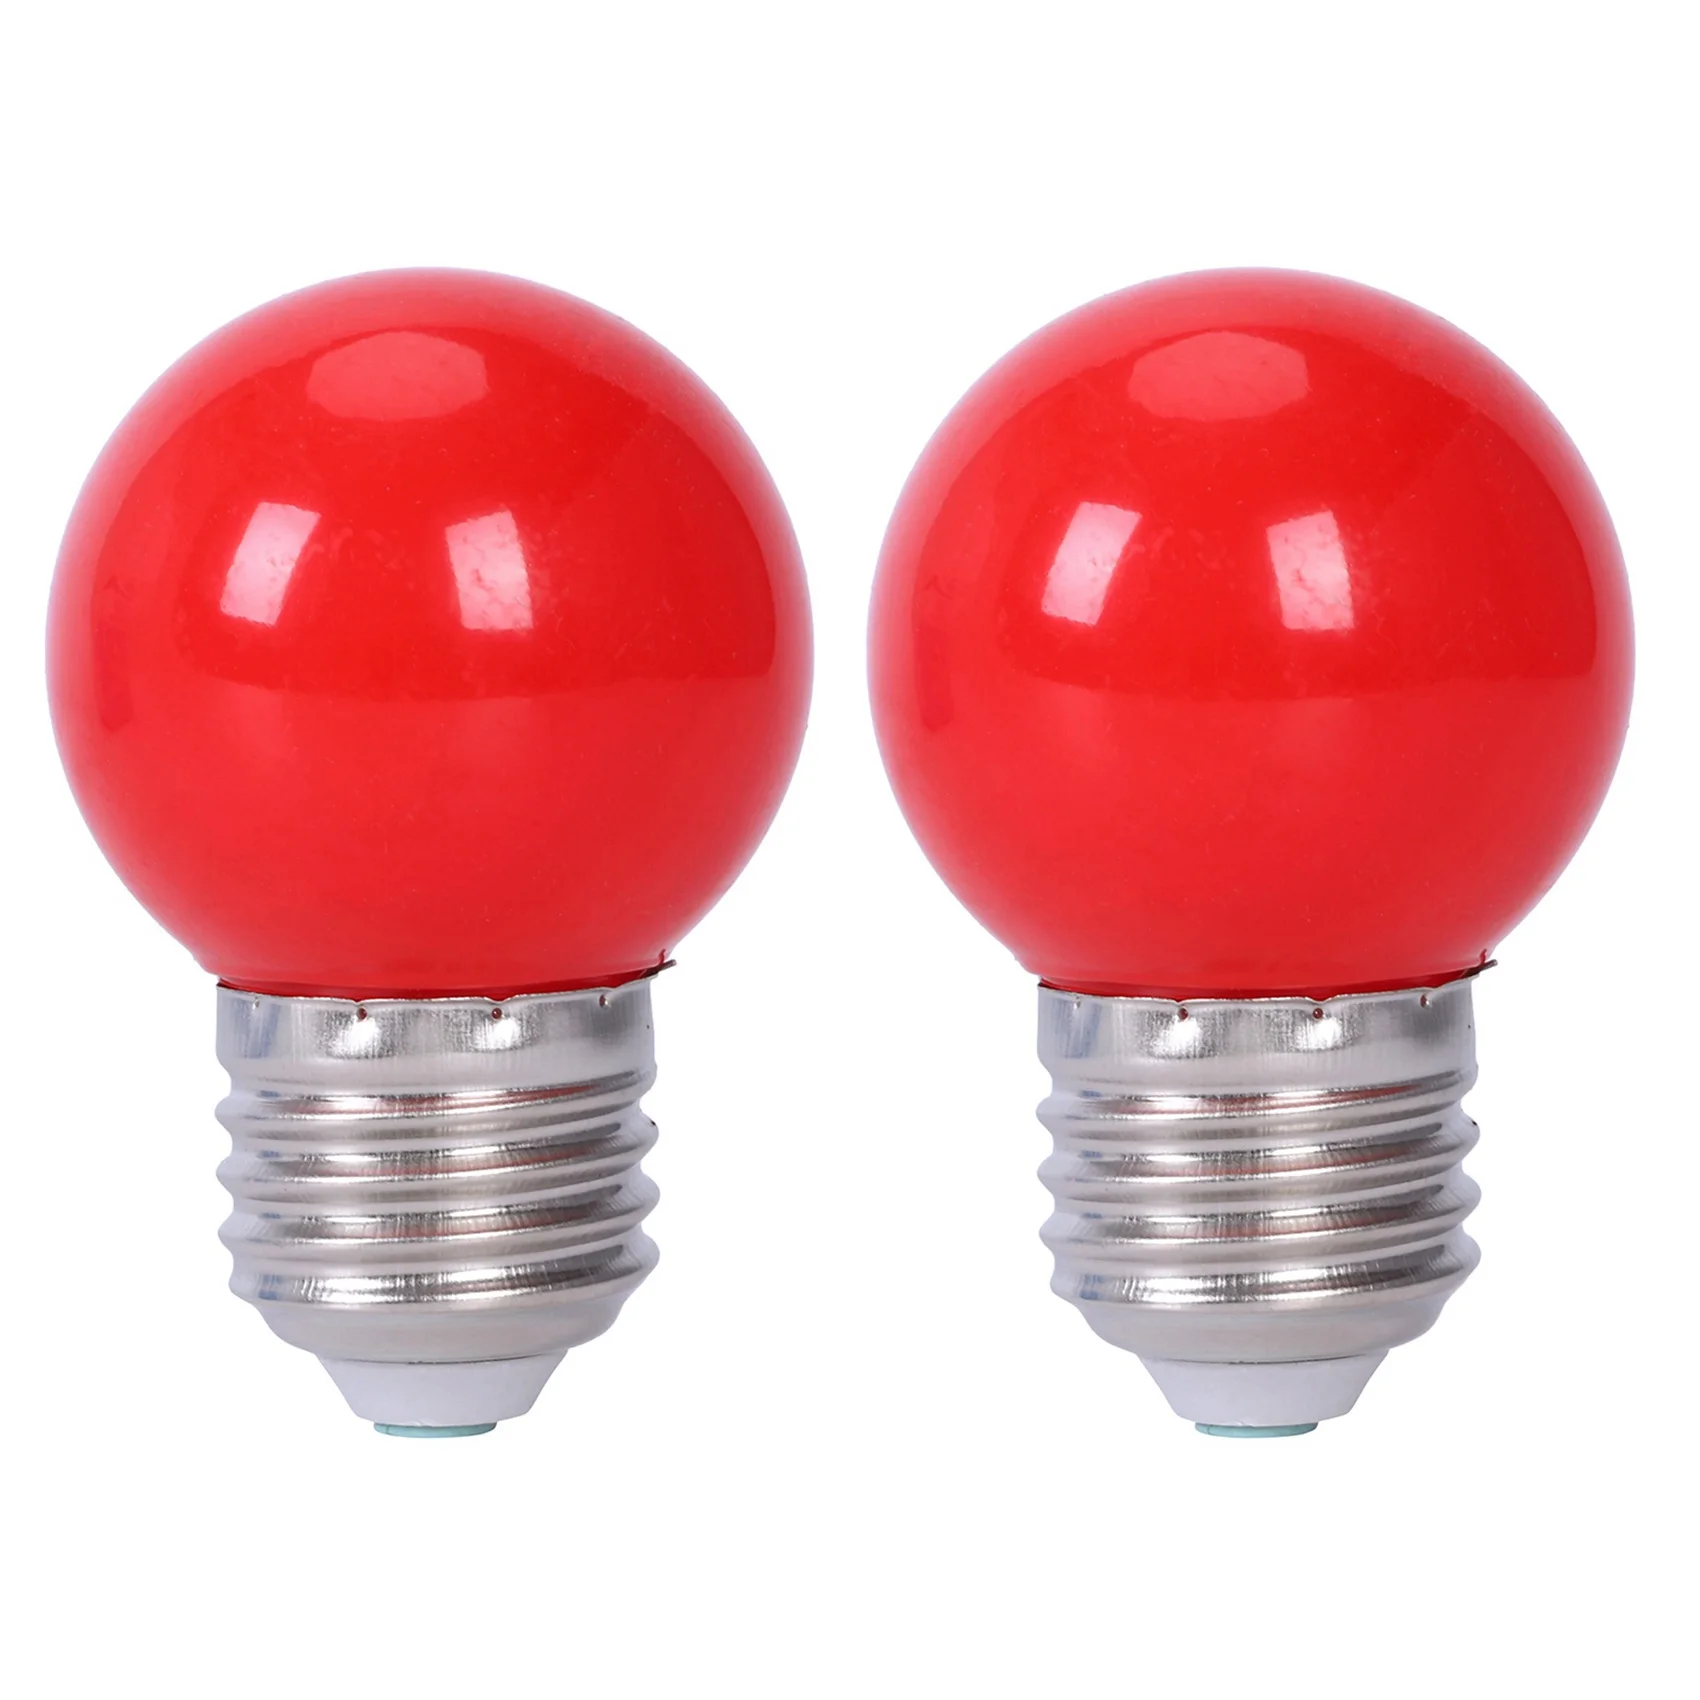 

2X E27 3W 6 SMD LED Energy Saving Globe Bulb Light Lamp AC 110-240V Red